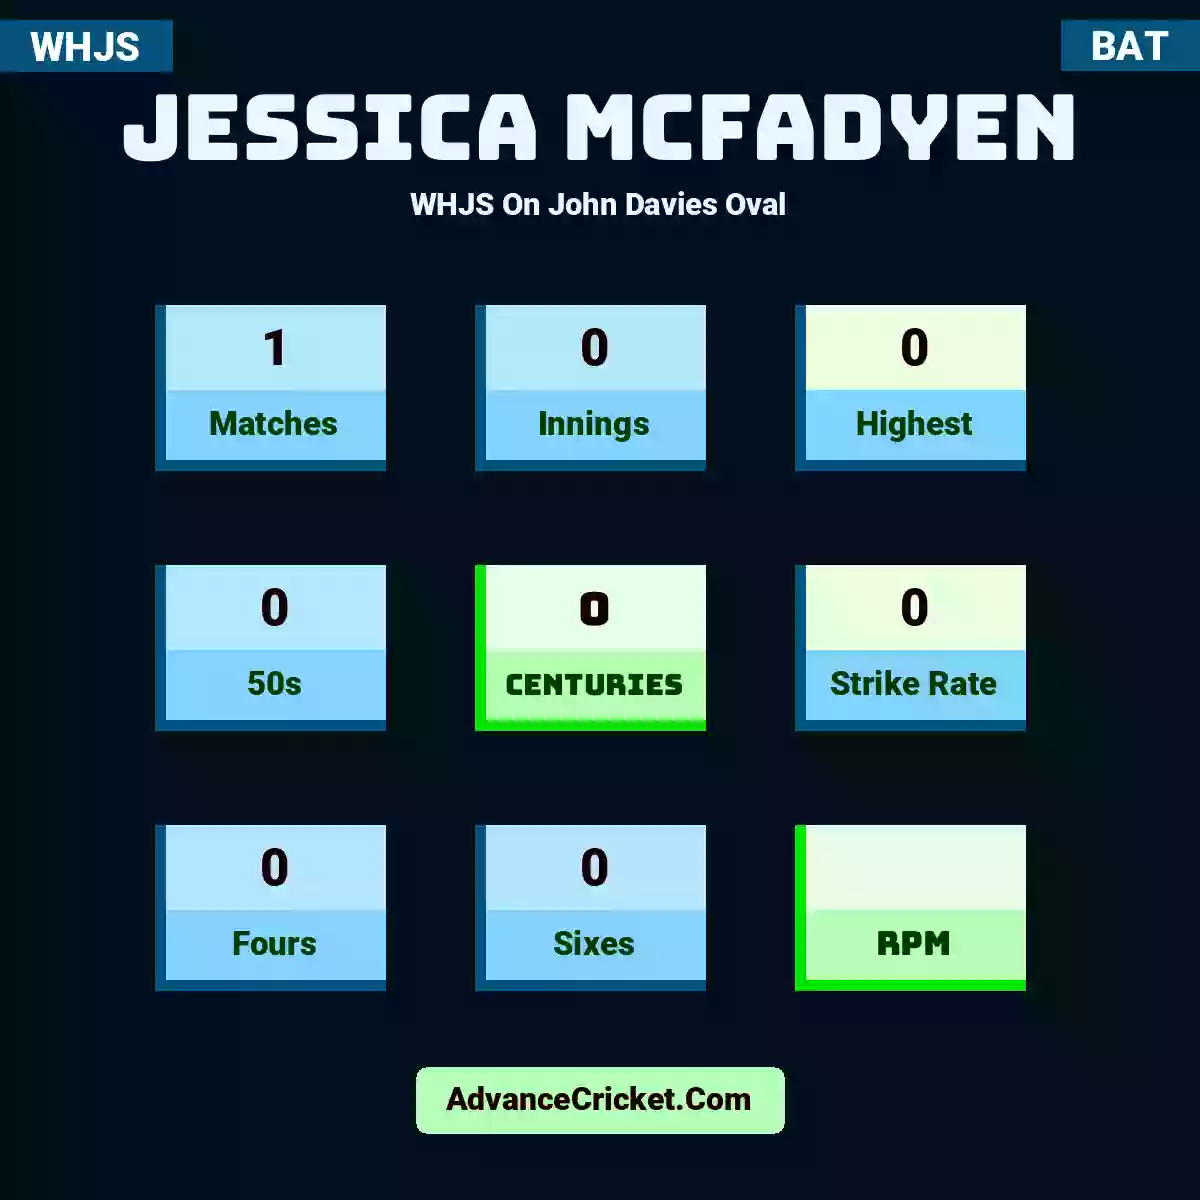 Jessica McFadyen WHJS  On John Davies Oval, Jessica McFadyen played 1 matches, scored 0 runs as highest, 0 half-centuries, and 0 centuries, with a strike rate of 0. J.McFadyen hit 0 fours and 0 sixes.